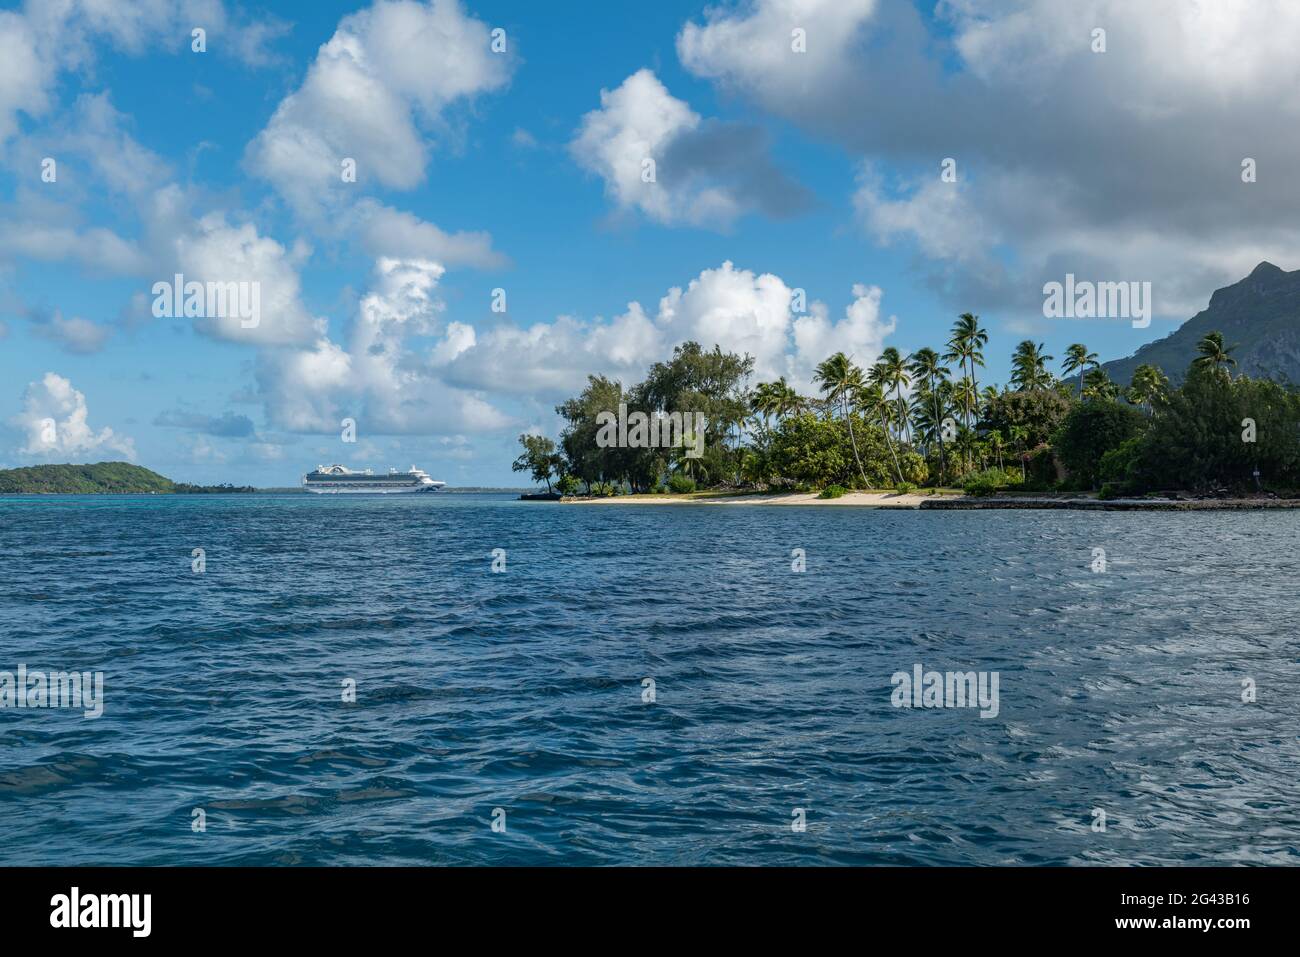 Cruise ship in roadstead in the lagoon of Bora Bora with coconut palms and beach on island, Bora Bora, Leeward Islands, French Polynesia, South Pacifi Stock Photo